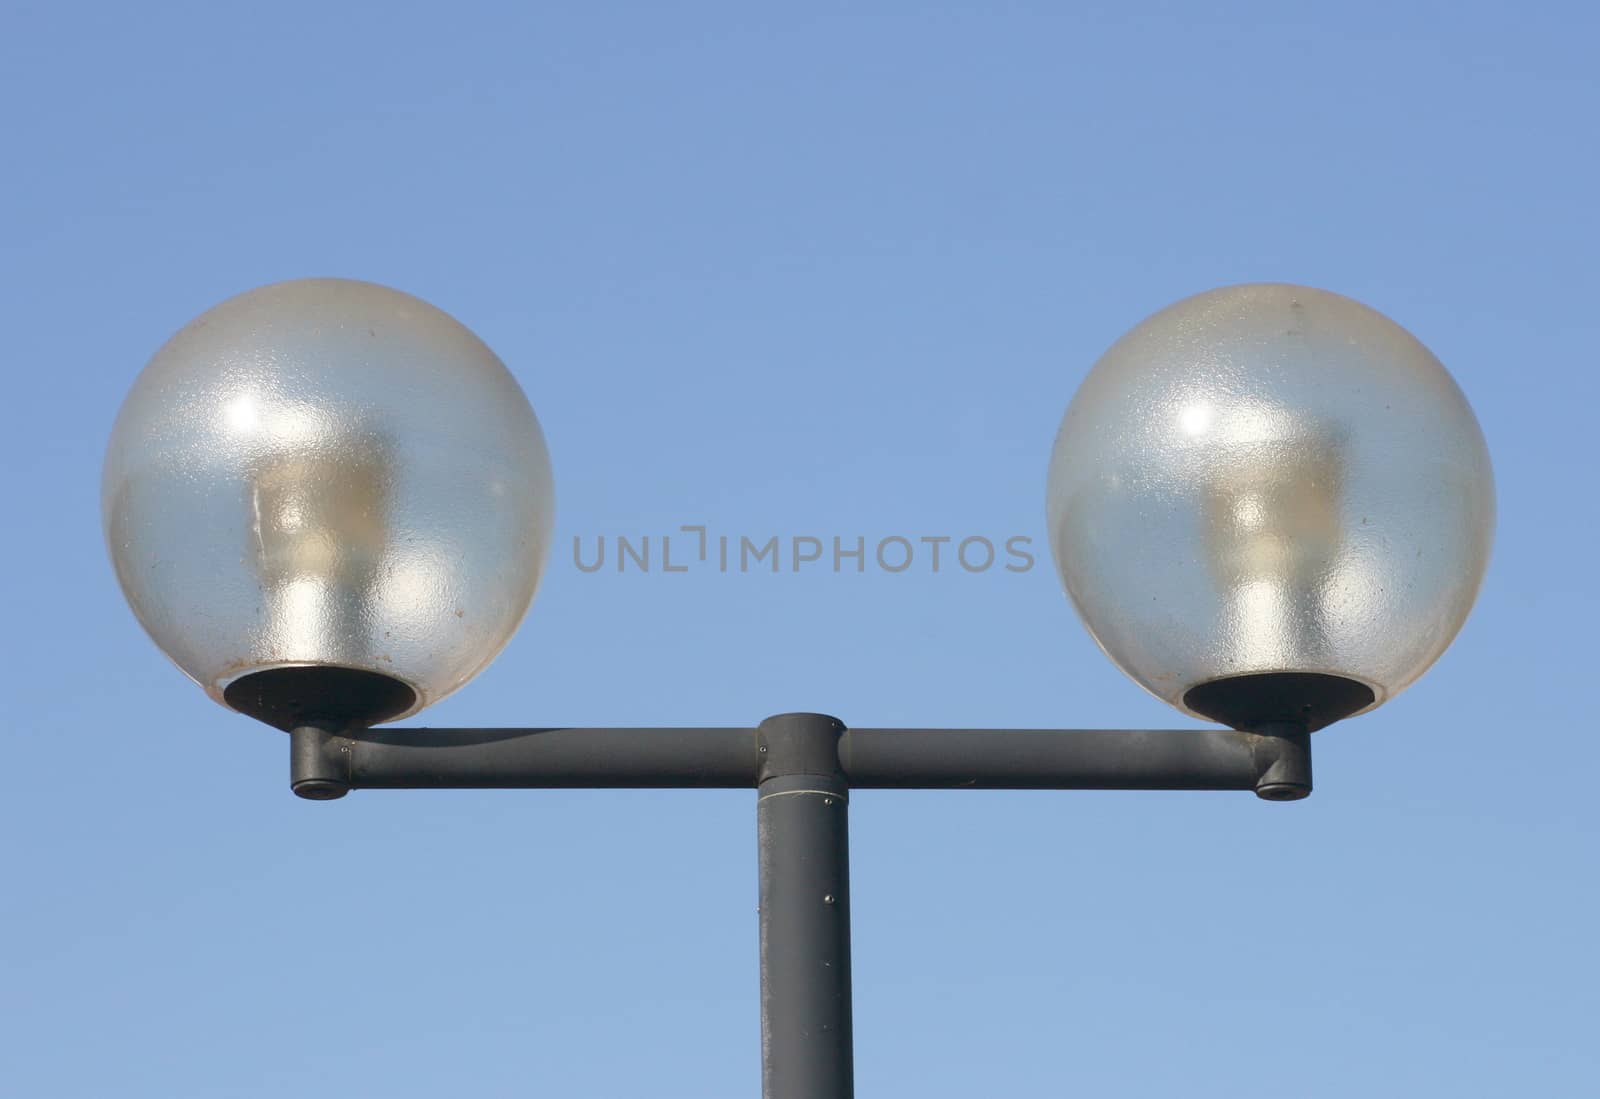 a two-beam street lamps with large, spherical glass bodies  eine zweistrahlige Strassenlampe mit gro�en,kugelf�rmigen Glask�rpern